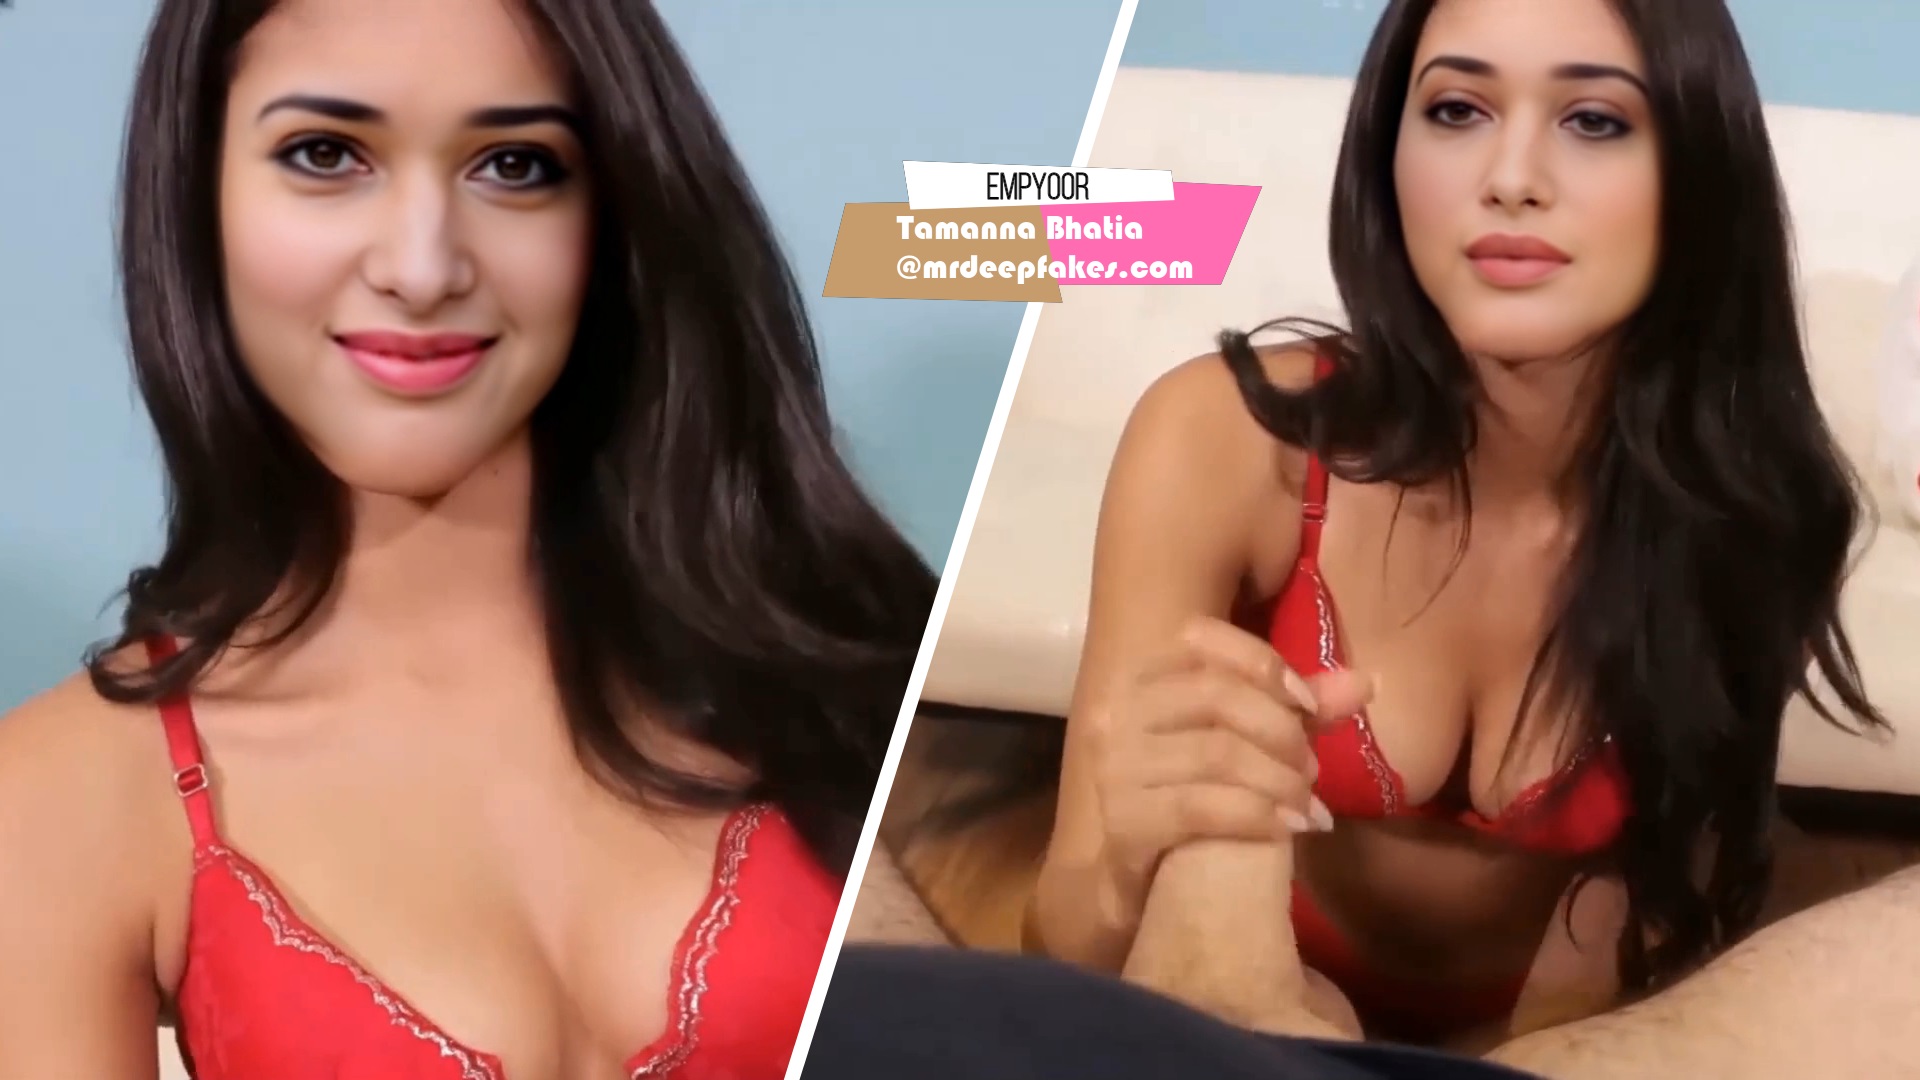 Tamannabhatiaxx - Tamanna Bhatia Handjob DeepFake Porn Video - MrDeepFakes